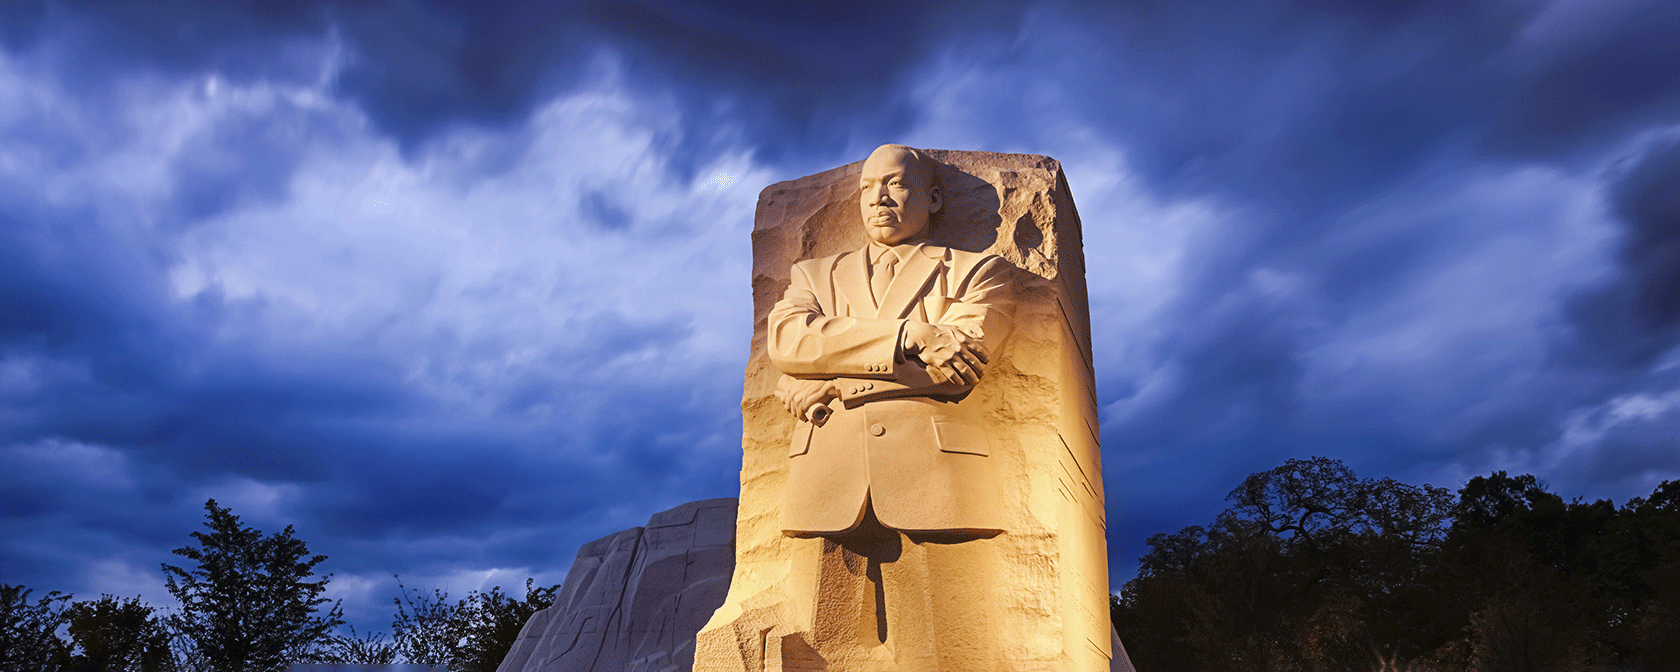 Memoriale di Martin Luther King Jr. di notte